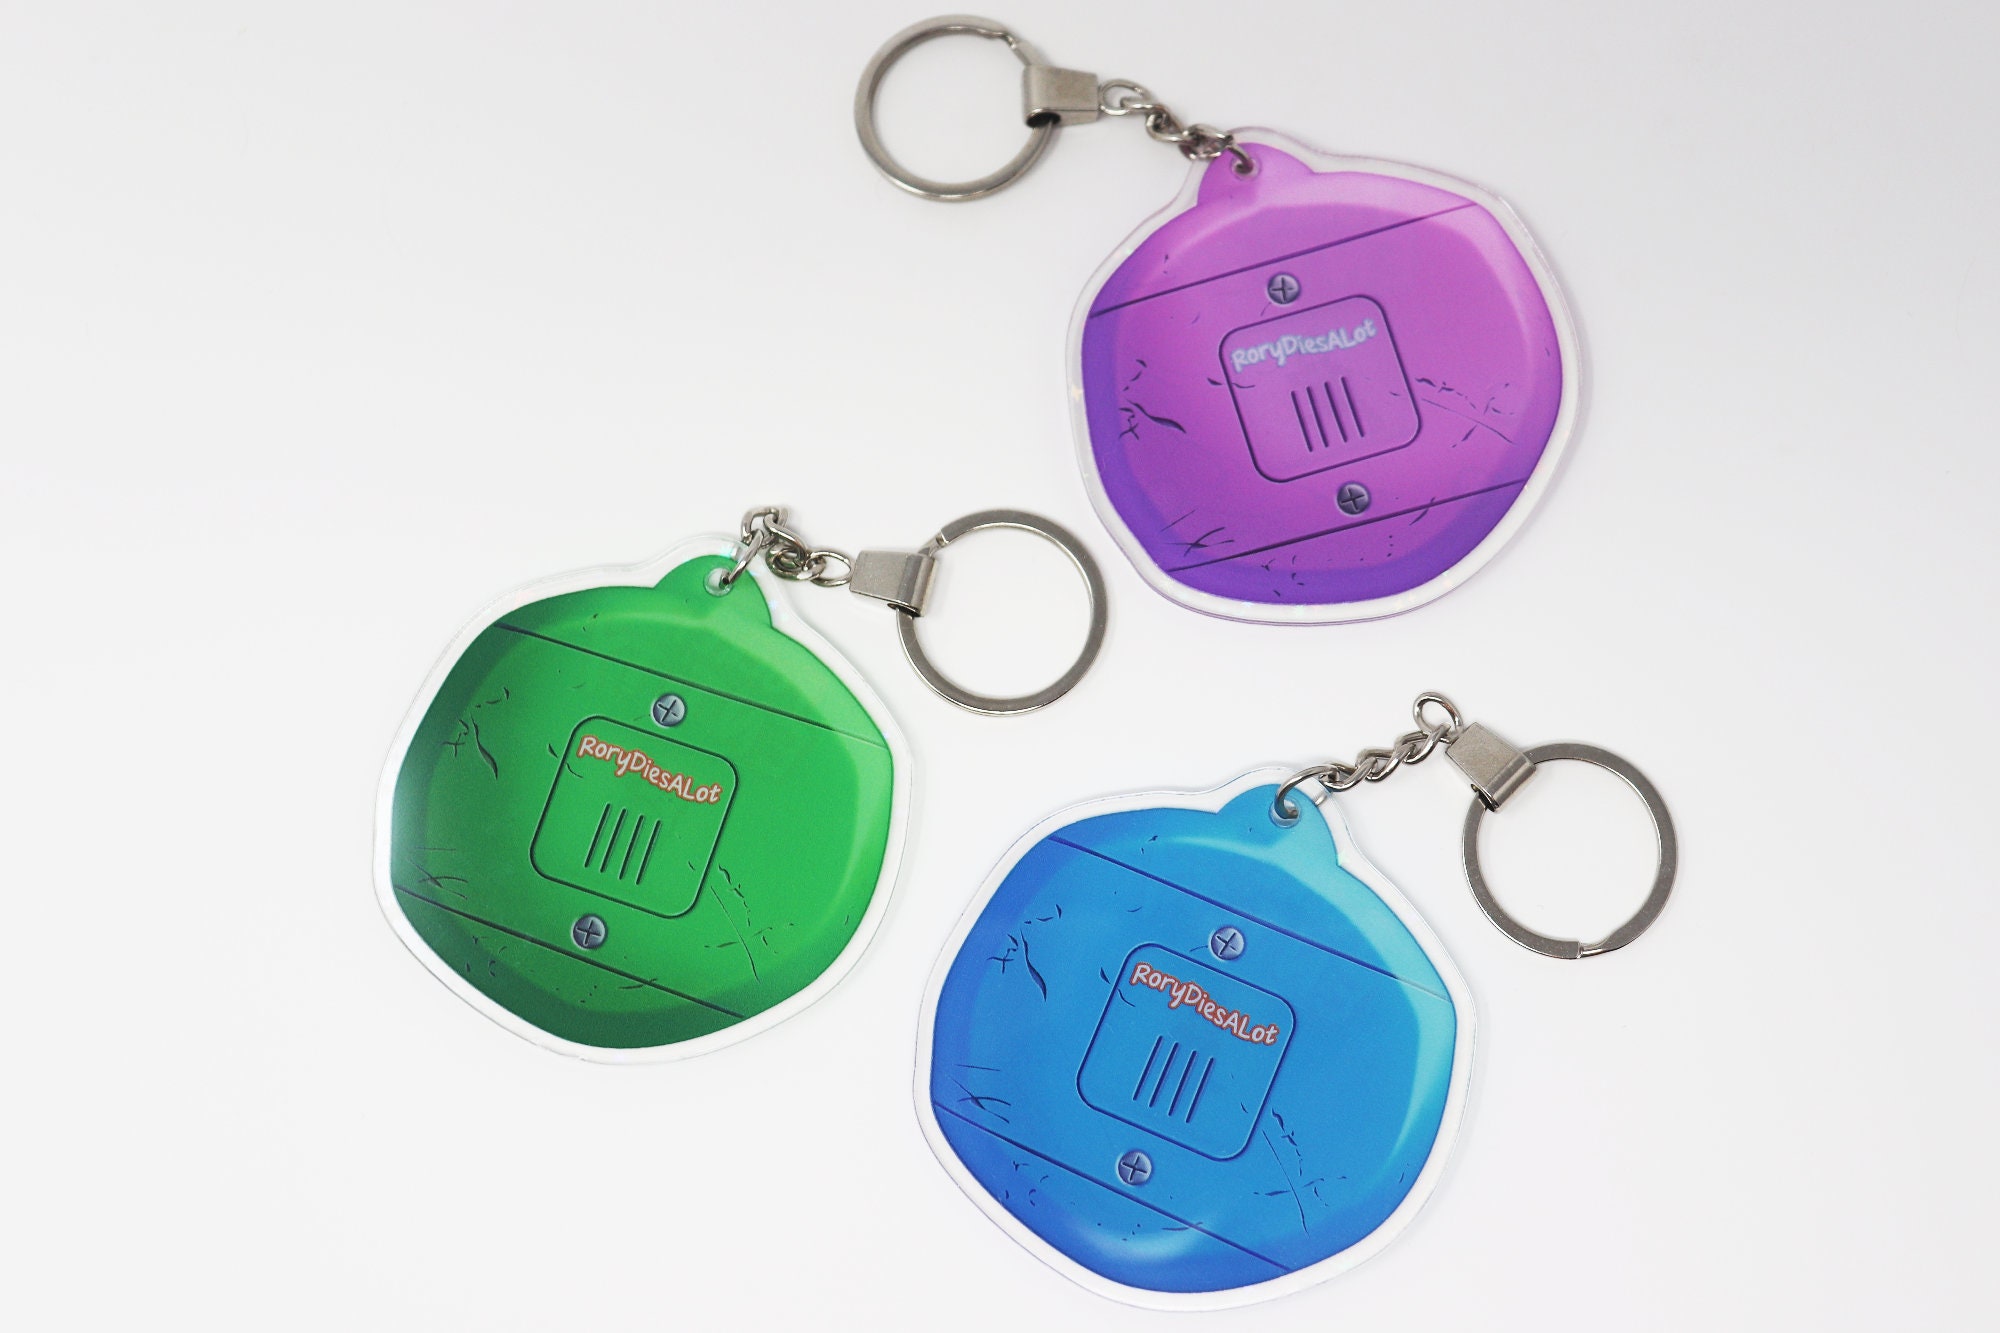 Pocket Entity Charm Dead by Daylight Keychain Michael - Etsy